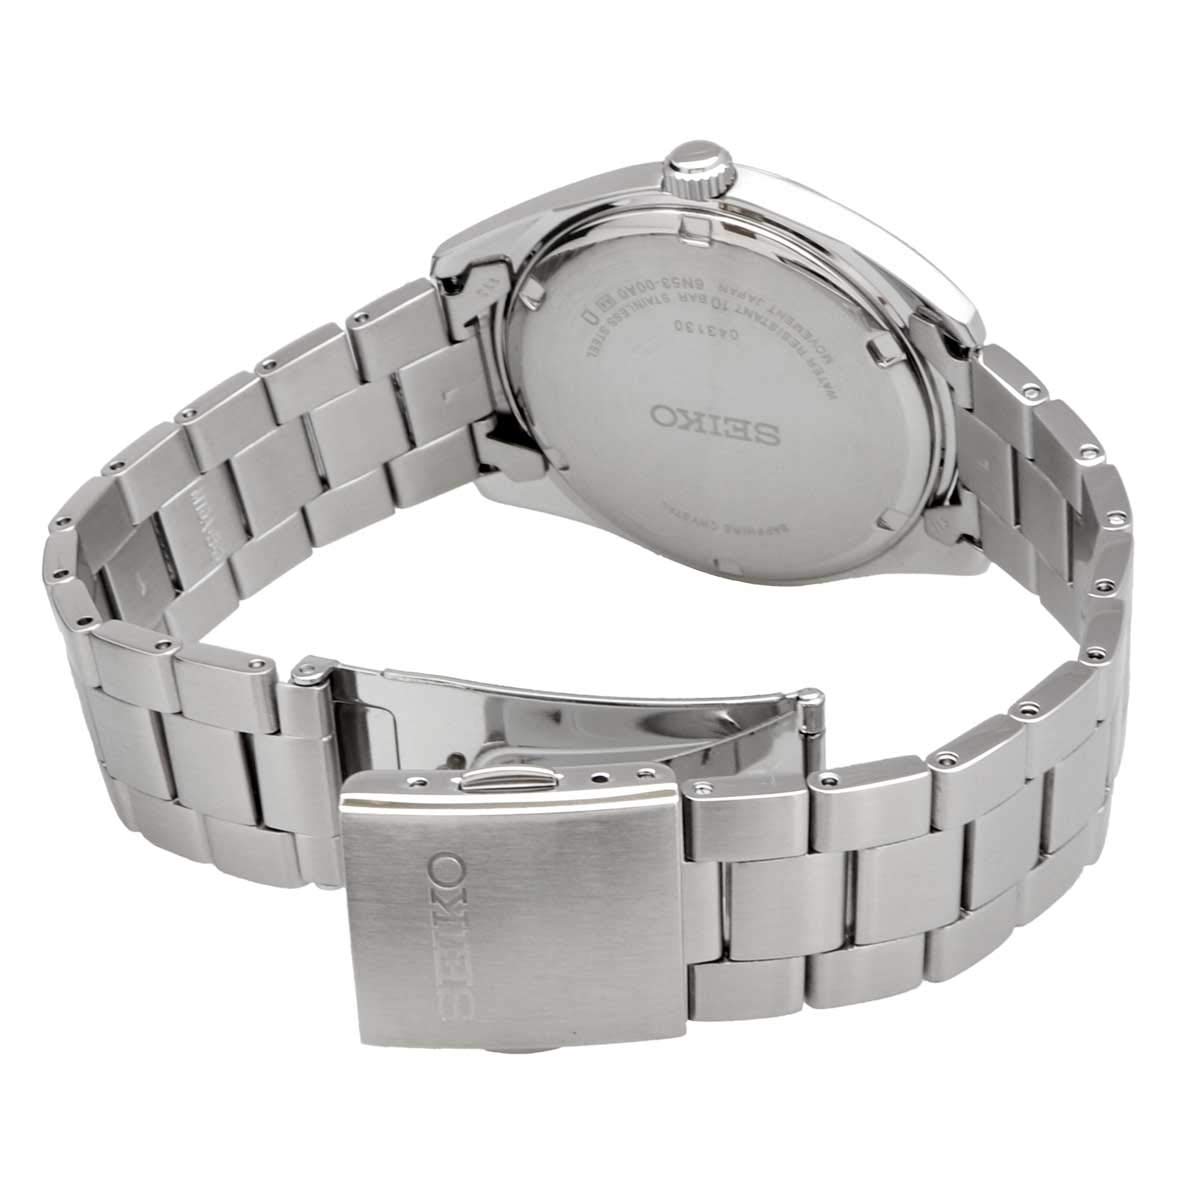 Mua [セイコー] クオーツ 海外モデル 腕時計 サファイアガラス SUR341P1 メンズ ネイビー バンド調整簡易工具付き [並行輸入品]  trên Amazon Nhật chính hãng 2023 | Giaonhan247